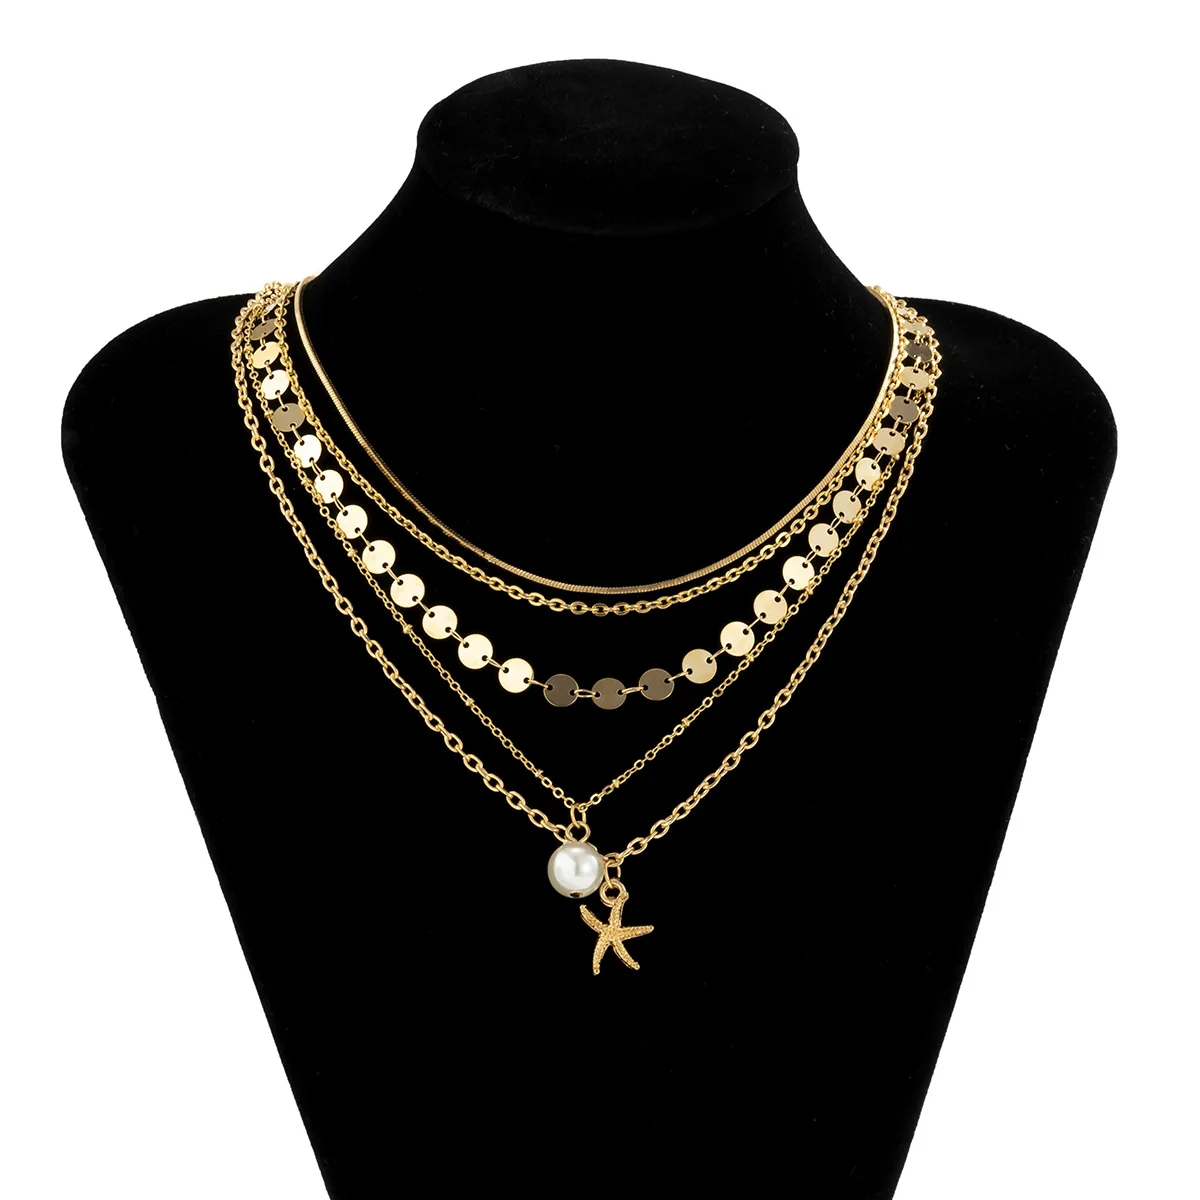 Beach ocean style sequin necklace pearl starfish pendant jewelry set minimalist jewelry women accessories